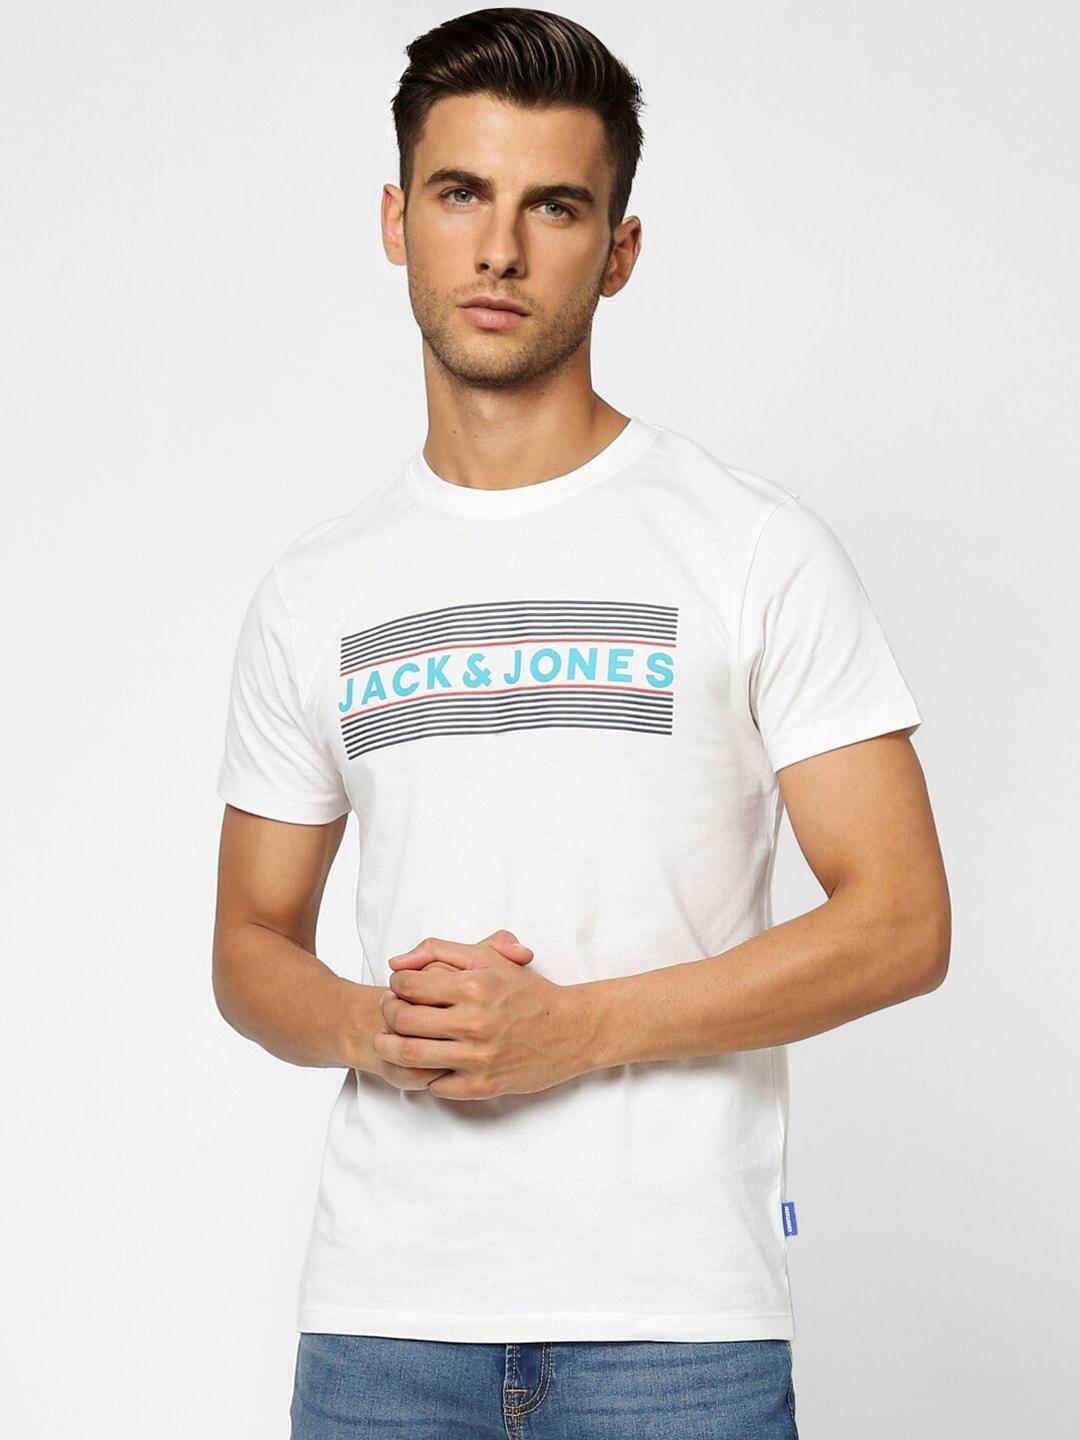 Jack & Jones Men White Typography Printed Cotton Slim Fit T-shirt